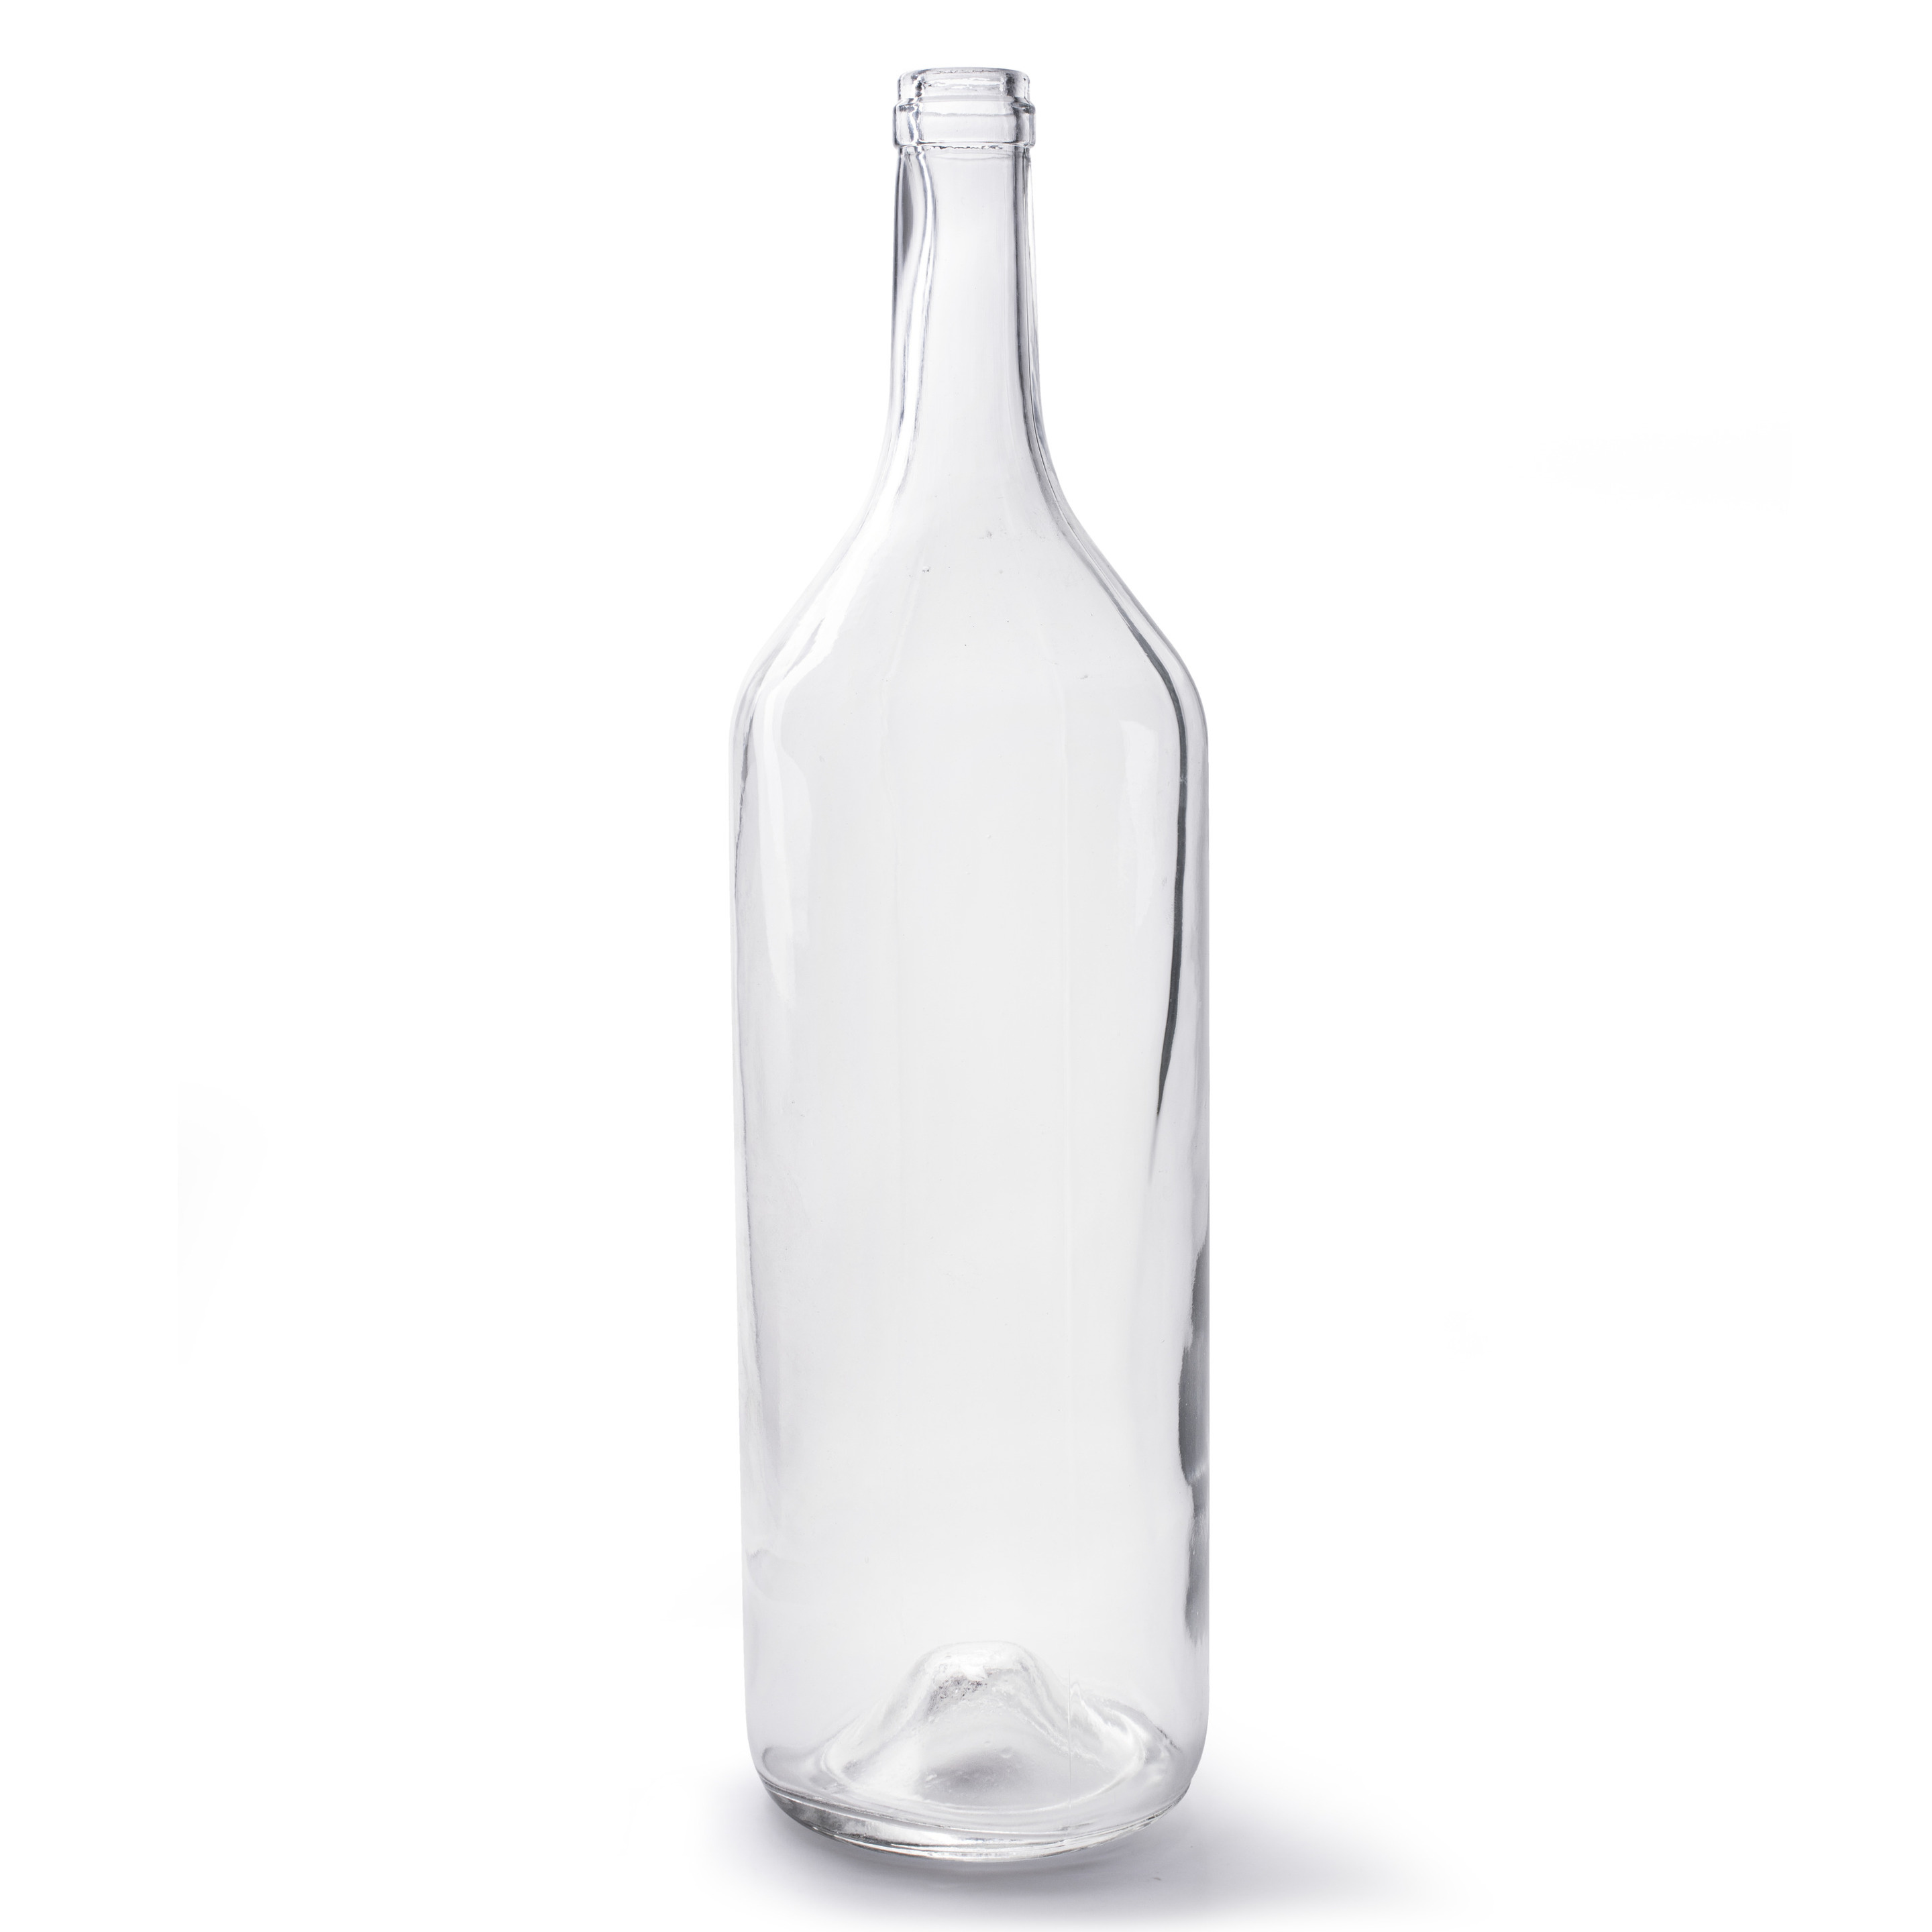 Merkloos Transparante fles vaas/vazen van glas 14 x 53 cm -